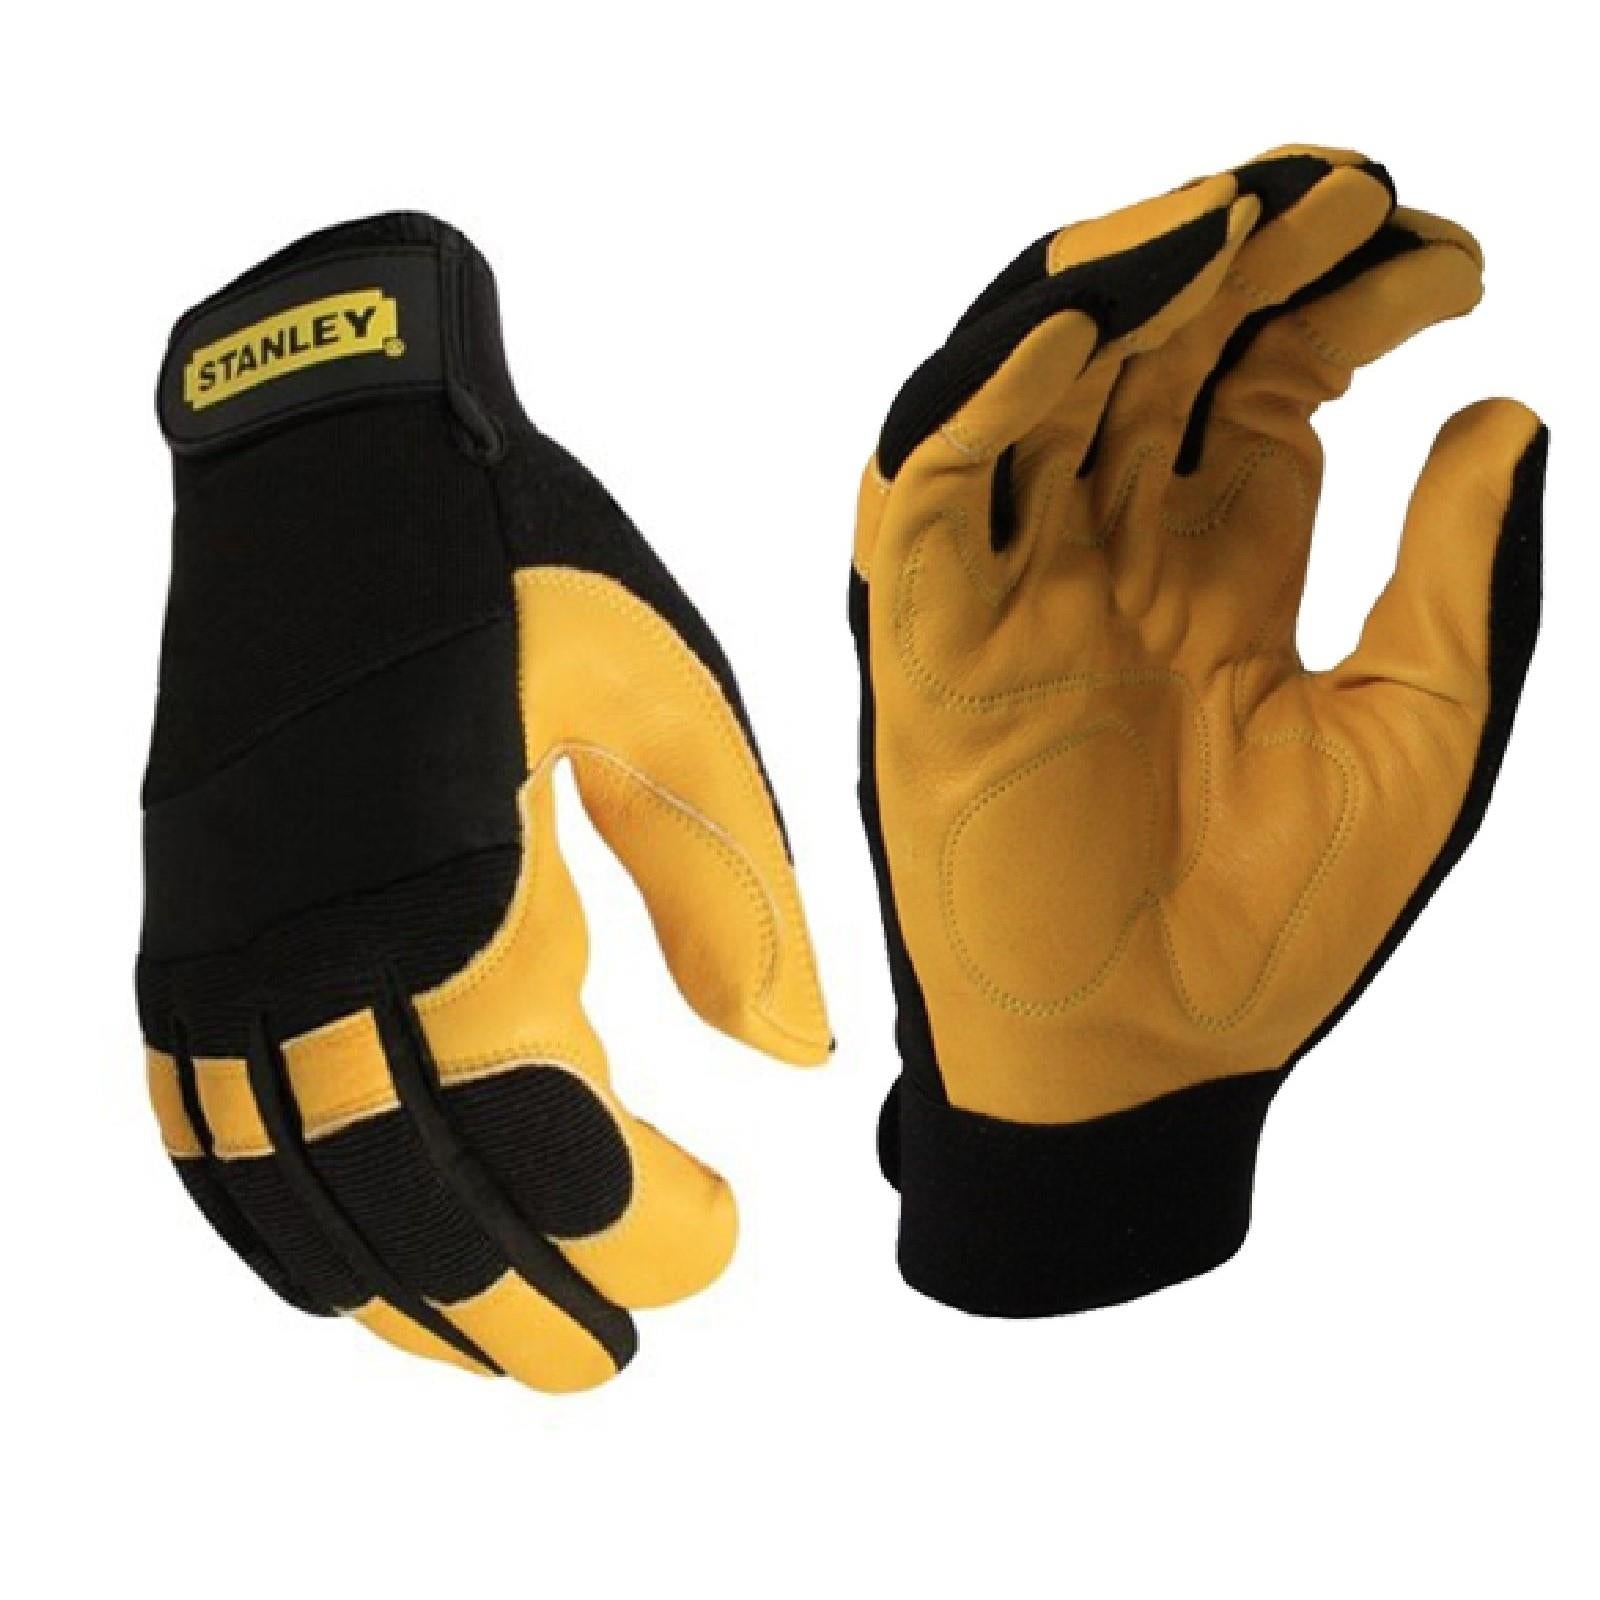 Stanley Hybrid Performance leather/spandex work glove #SY750L